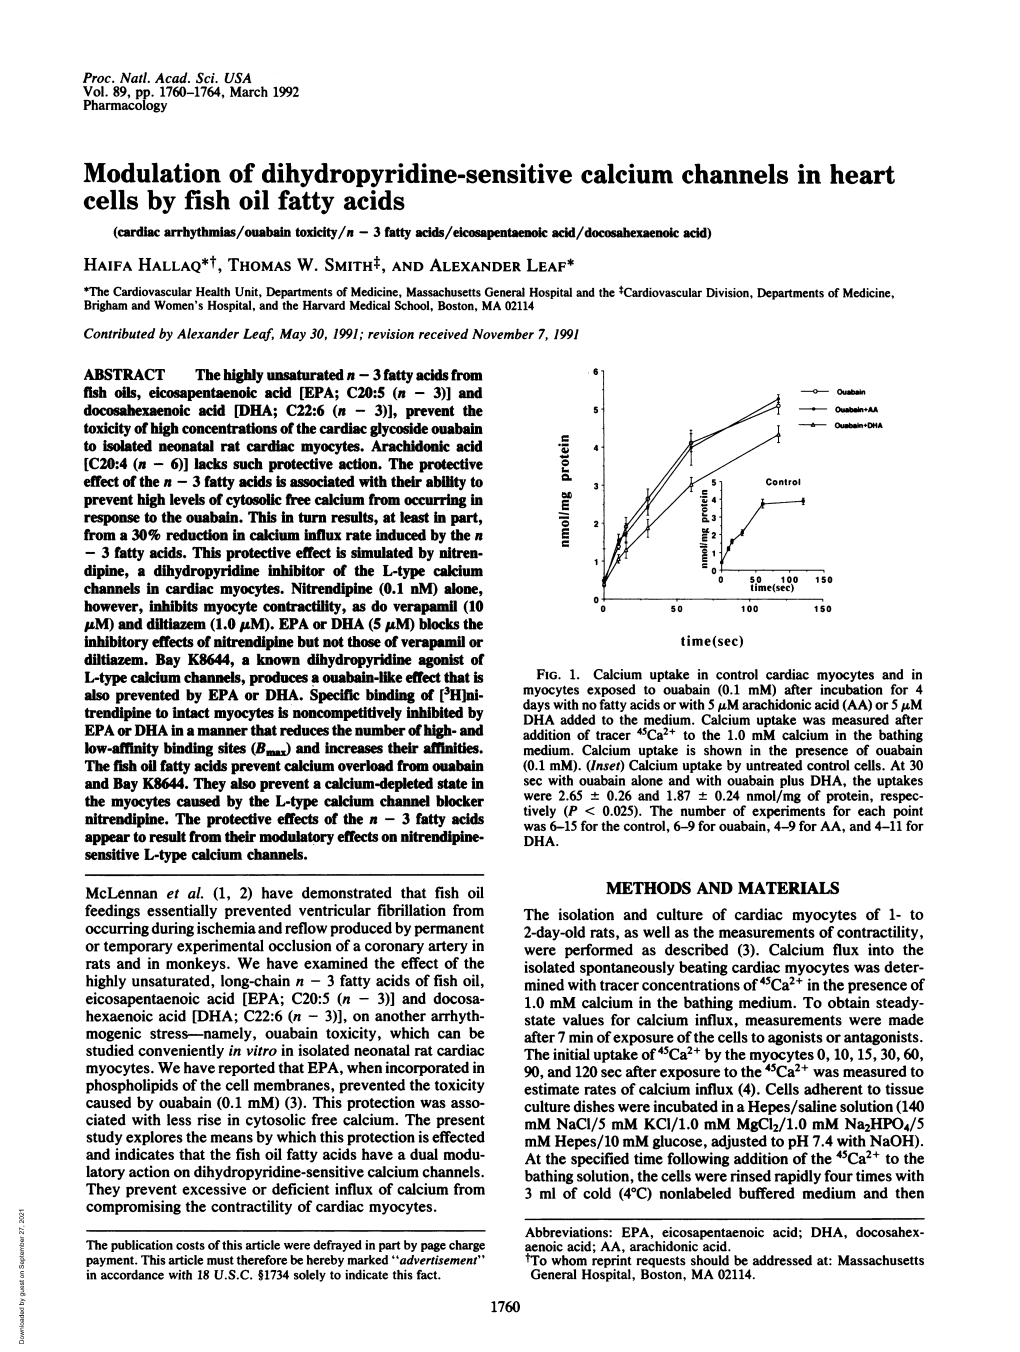 Modulation of Dihydropyridine-Sensitive Calcium